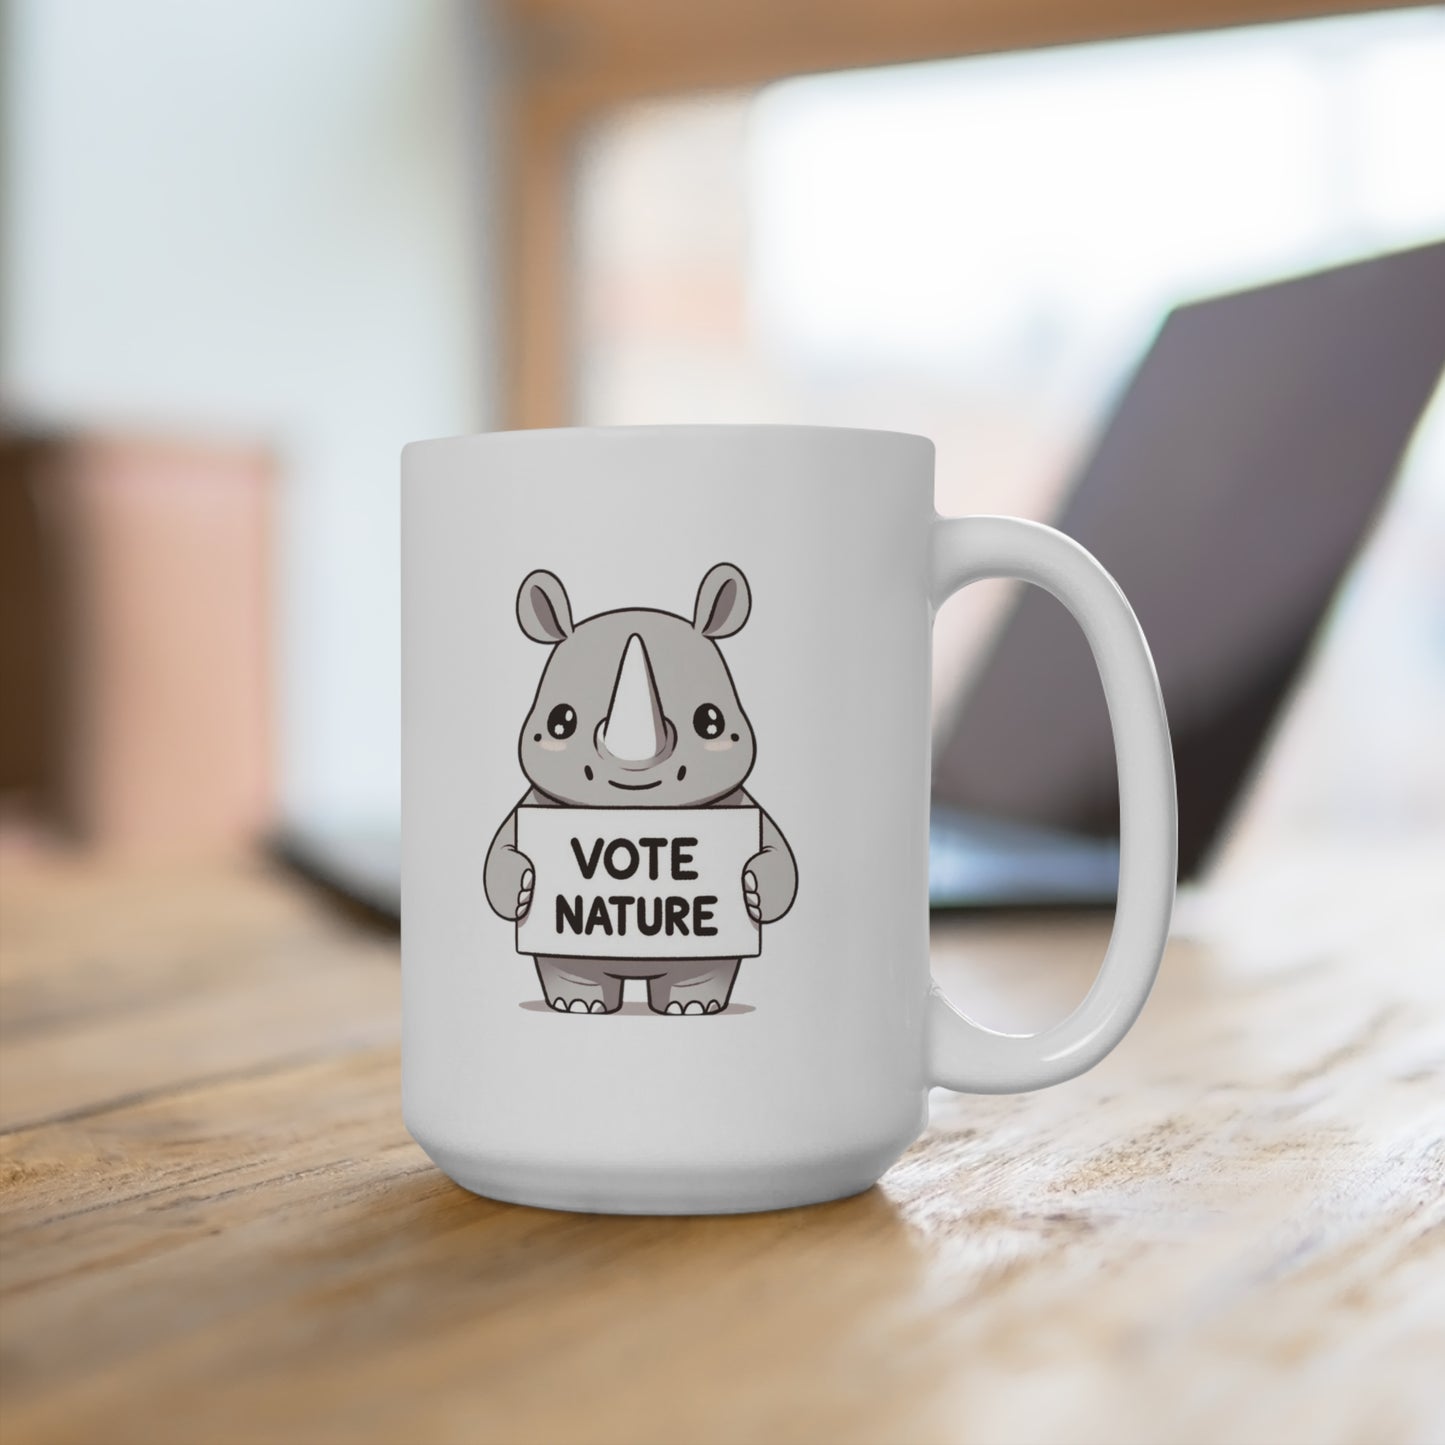 Inspirational Cute Rhino Statement Coffee Mug (15oz): Vote Nature! Be a cute activist!